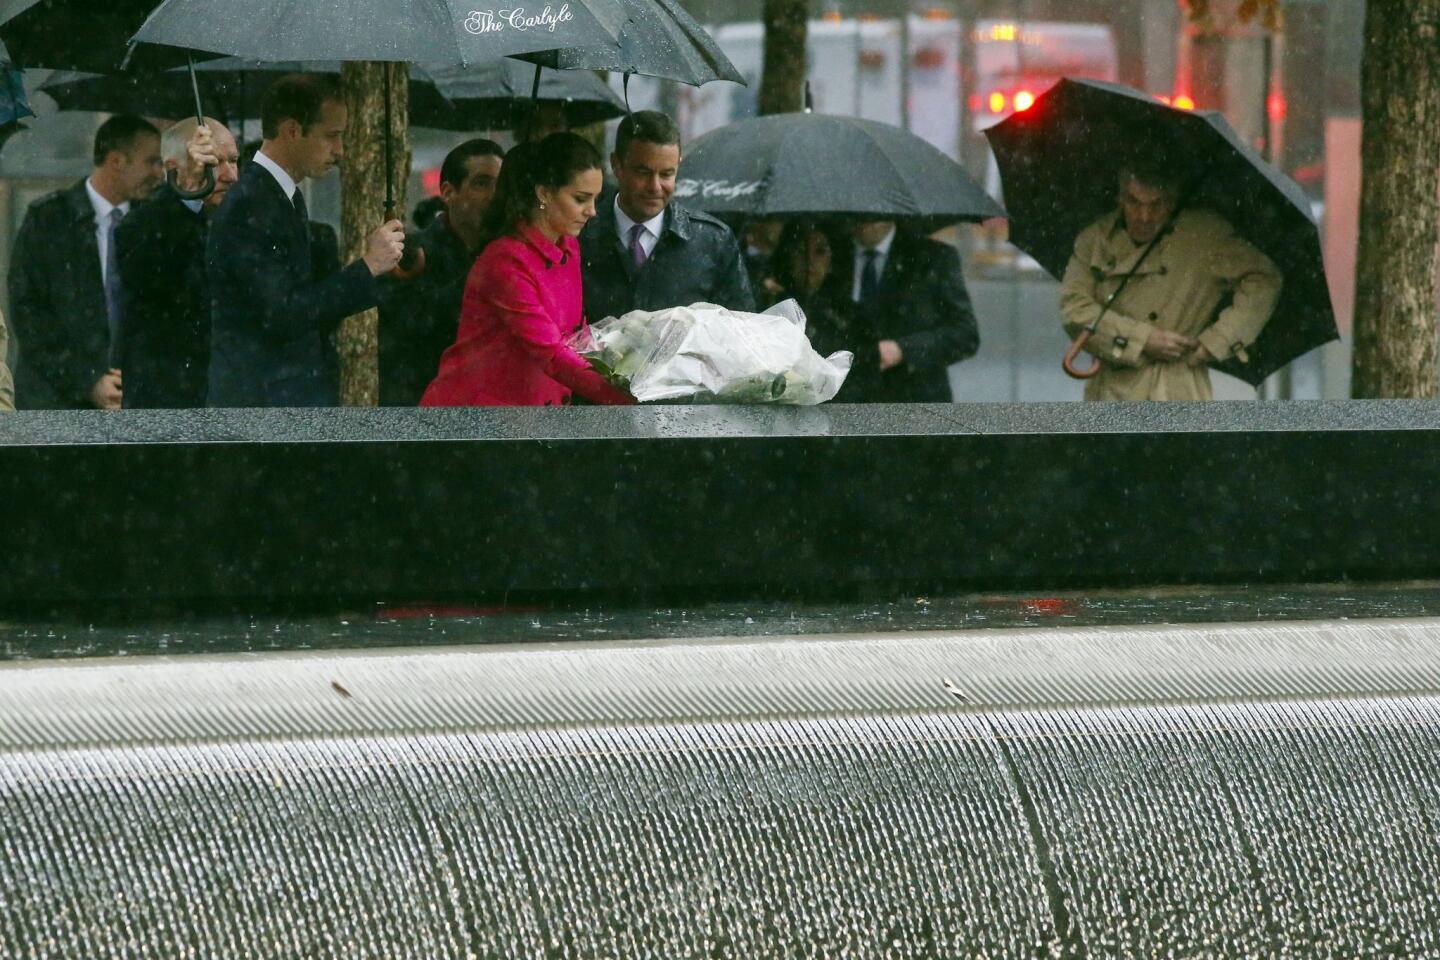 Duchess of Cambridge in New York